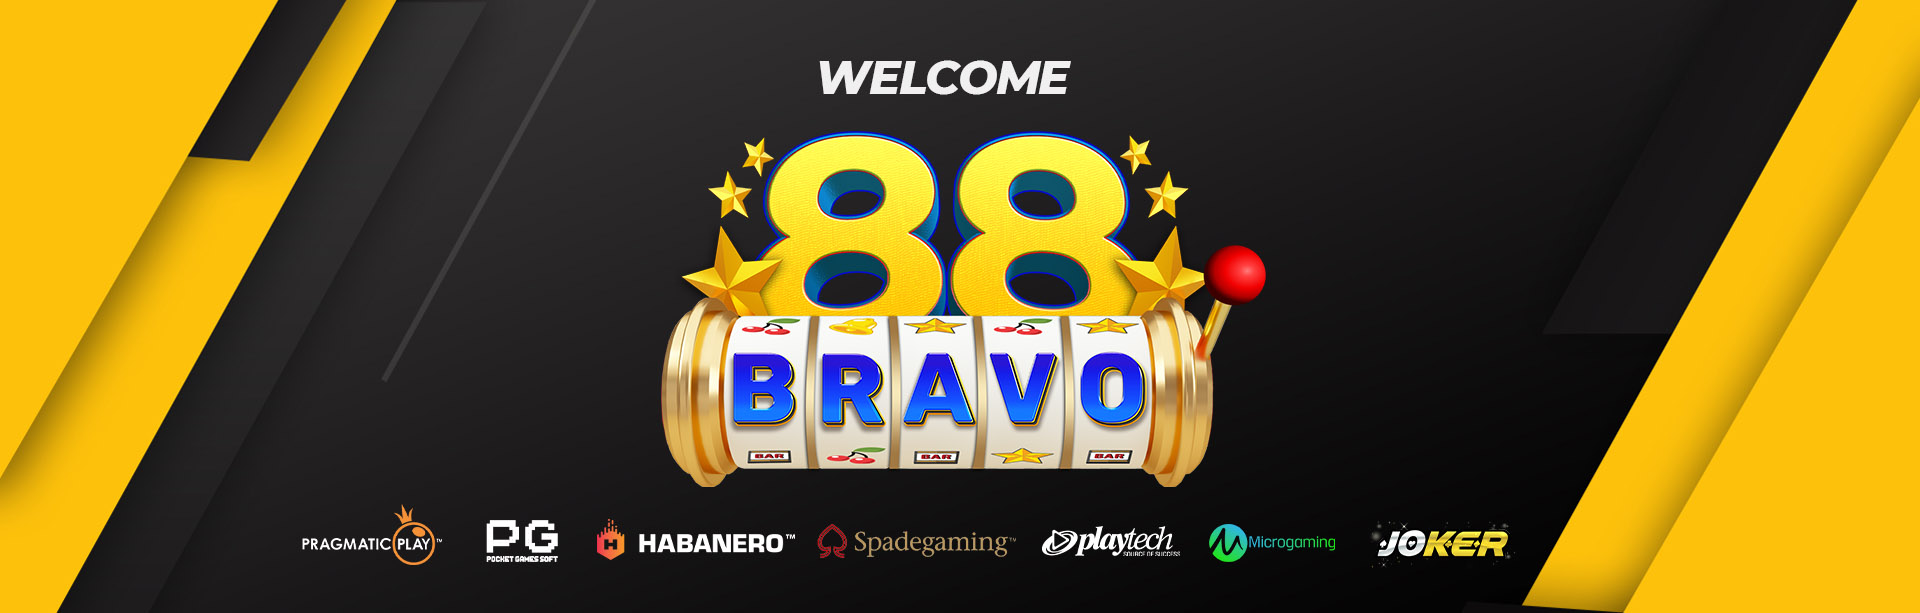 WELCOME BRAVO88